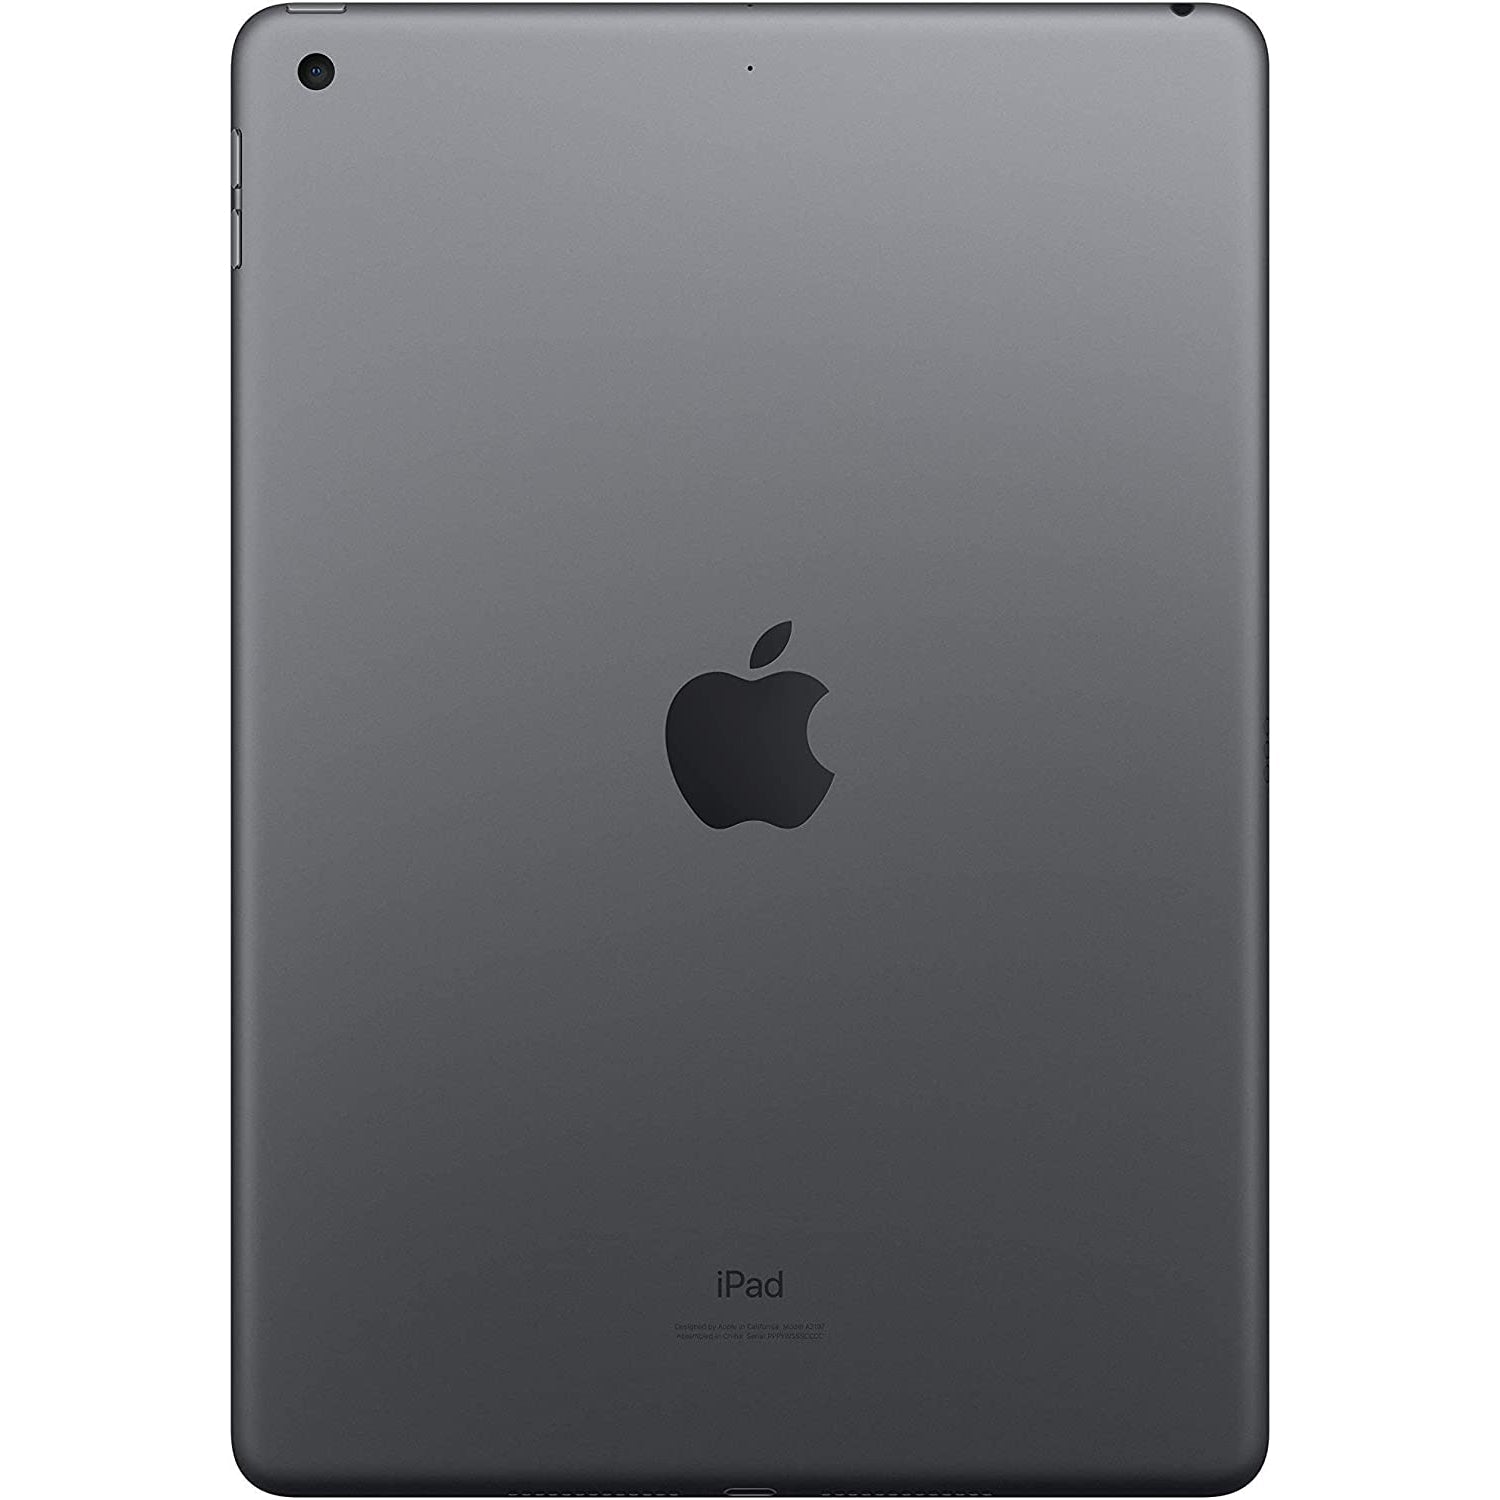 Apple iPad 10.2" 2019 - Wi-Fi - 32GB - Space Grey - Refurbished Excellent